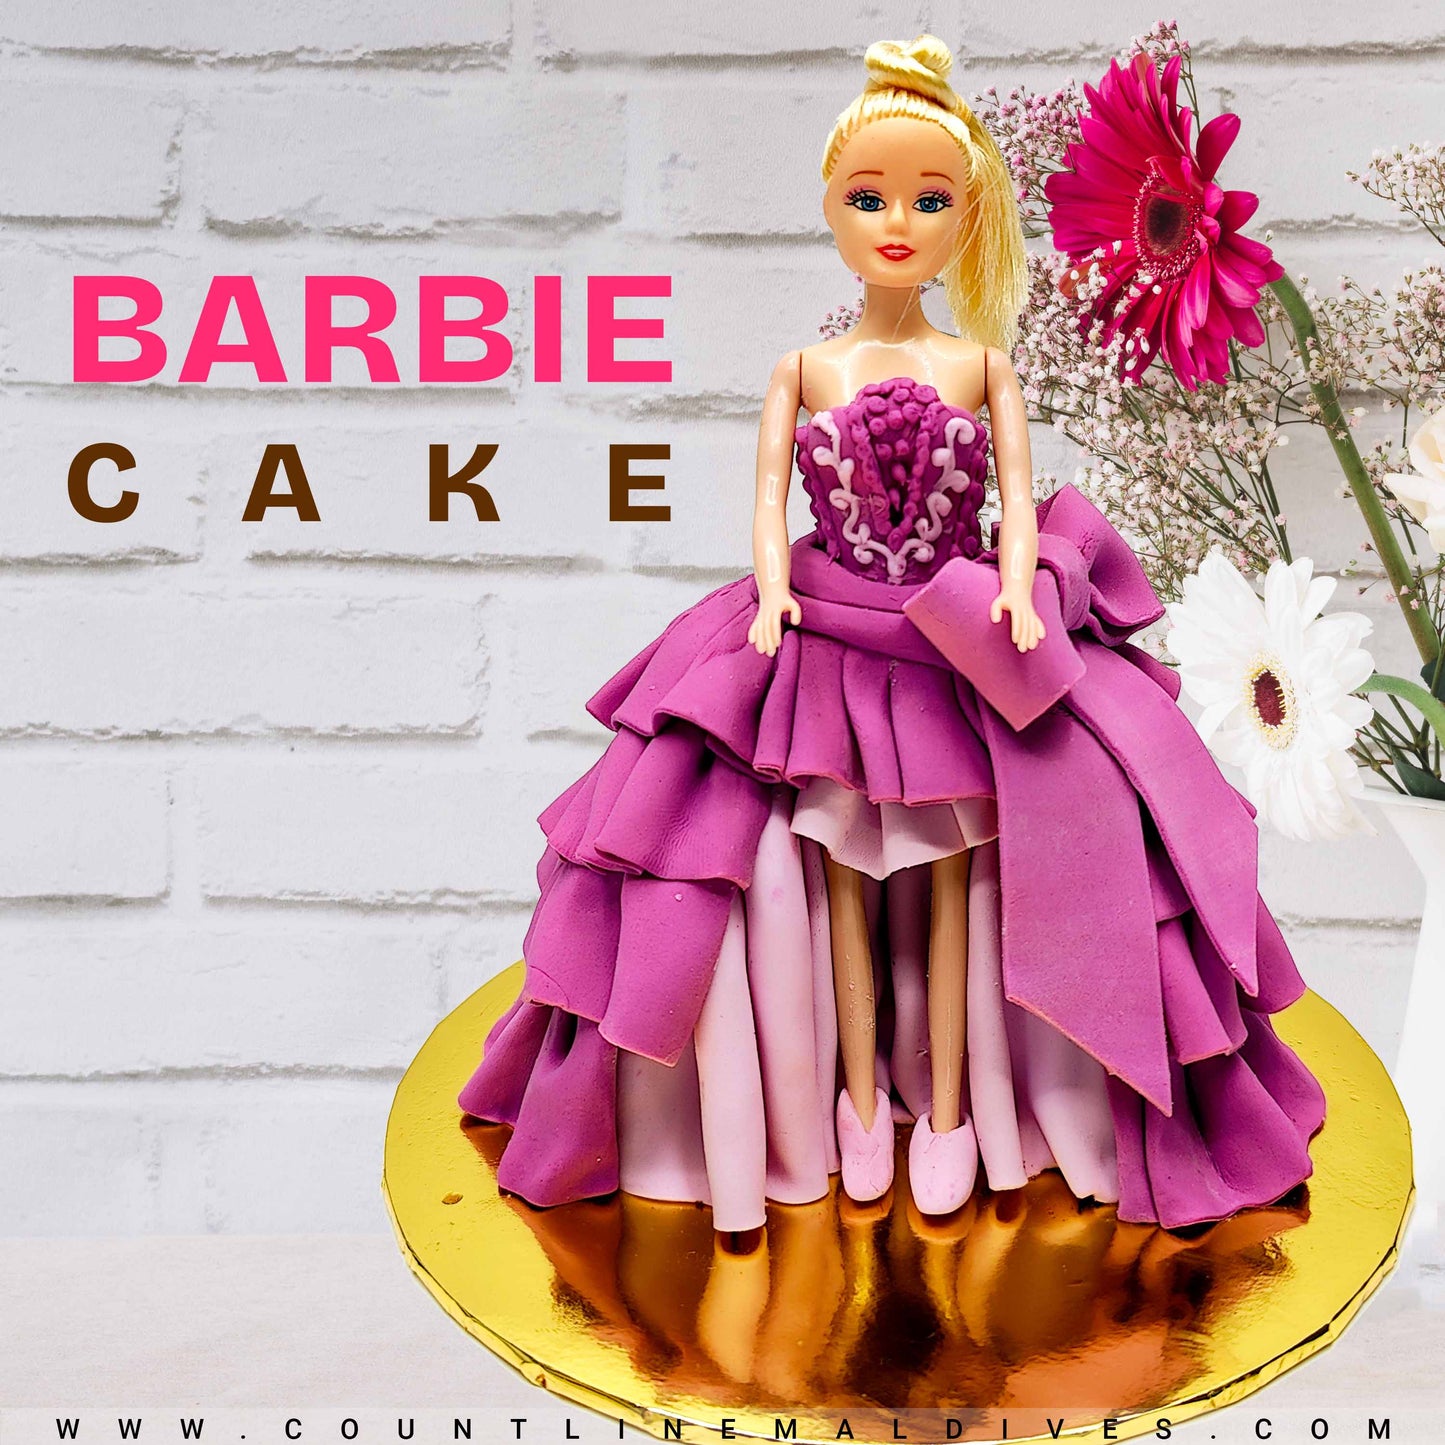 Barbie Cake #1